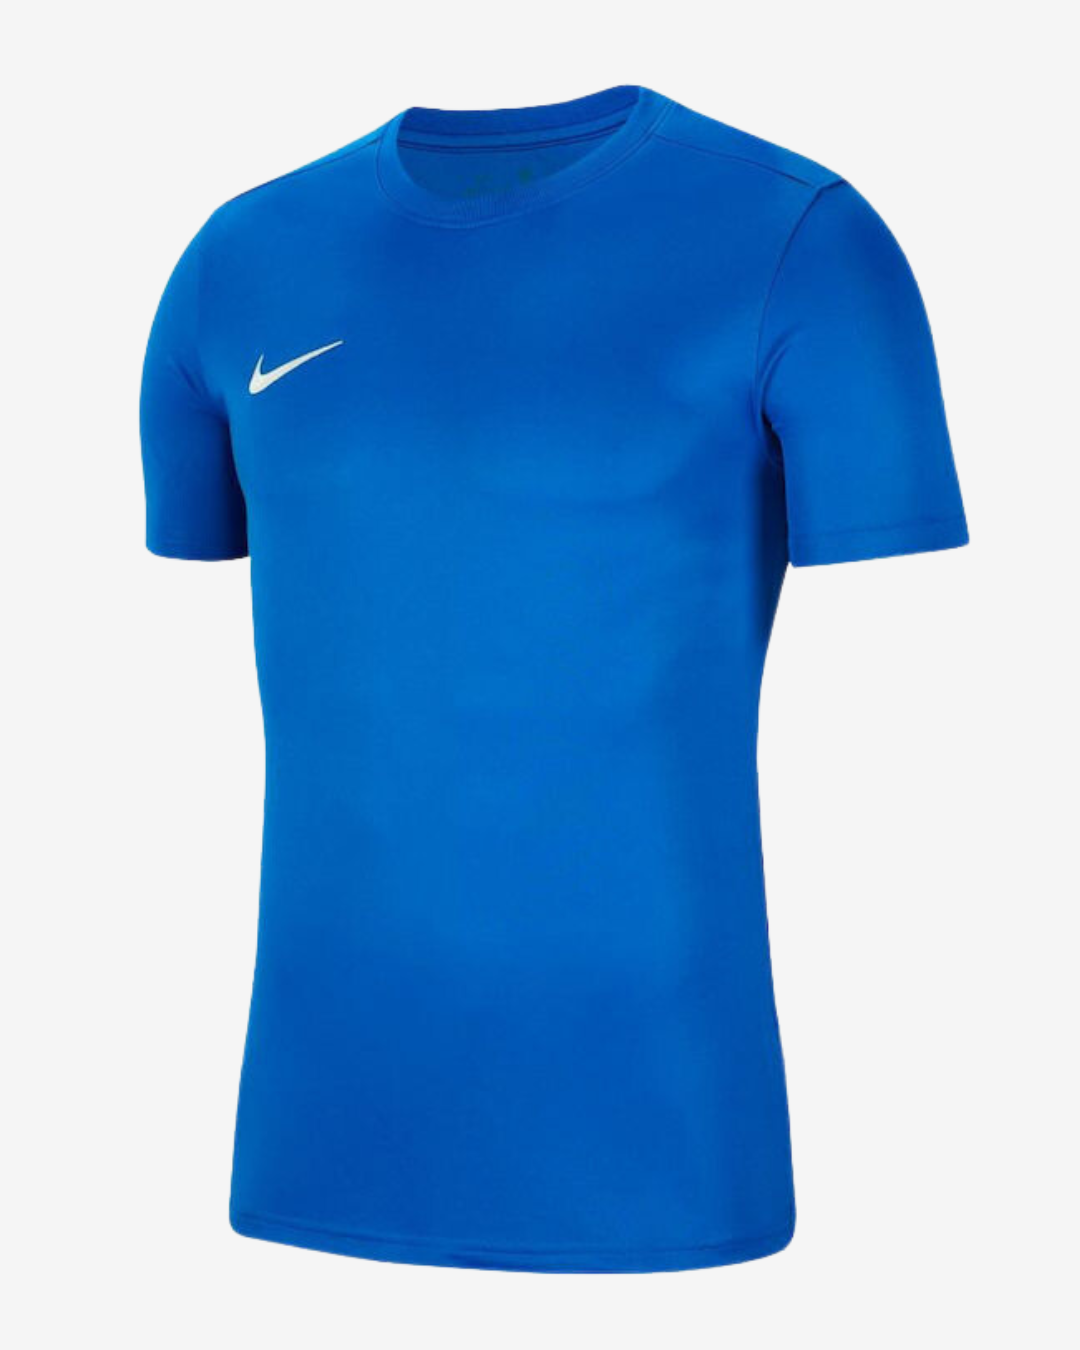 Nike Dri-fit park 7 t-shirt - Blå - Str. M - Modish.dk